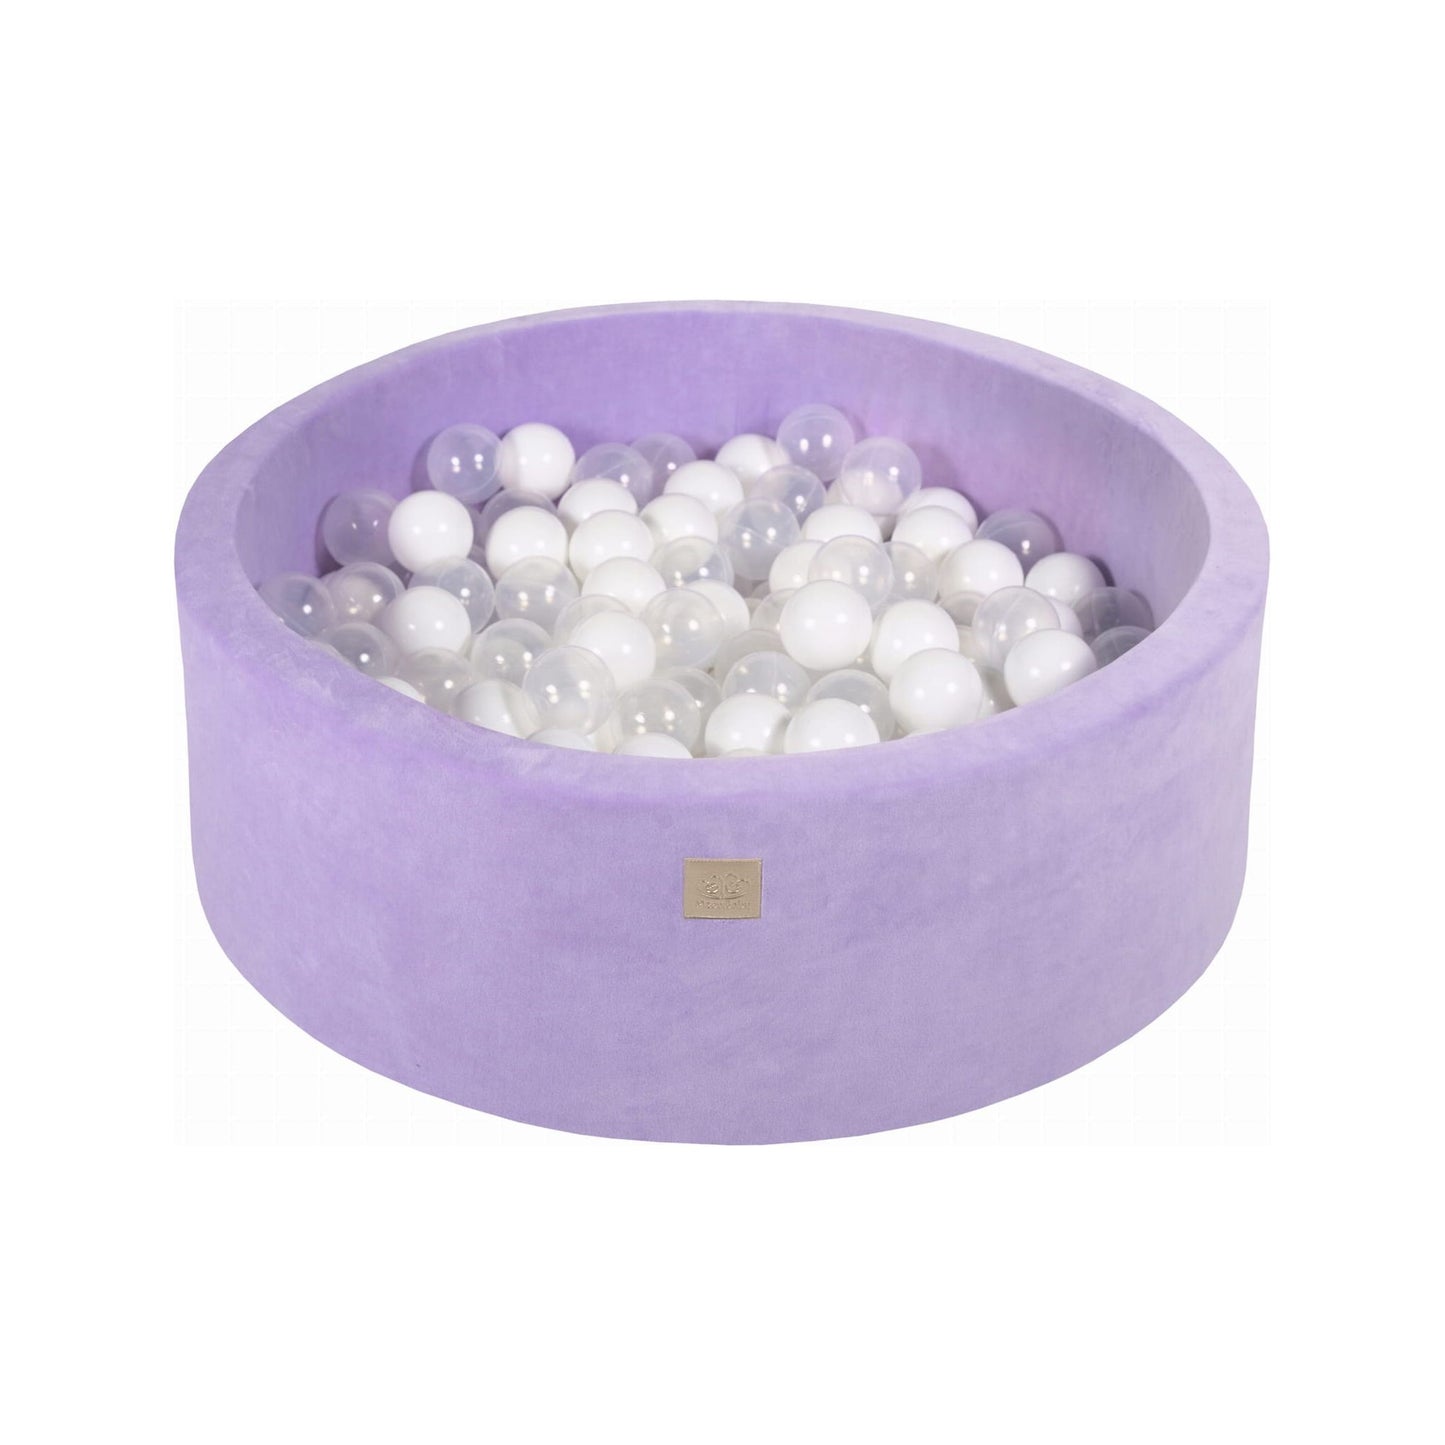 MeowBaby Kids Velvet Round Foam Ball Pit & 200 Balls - Lilac